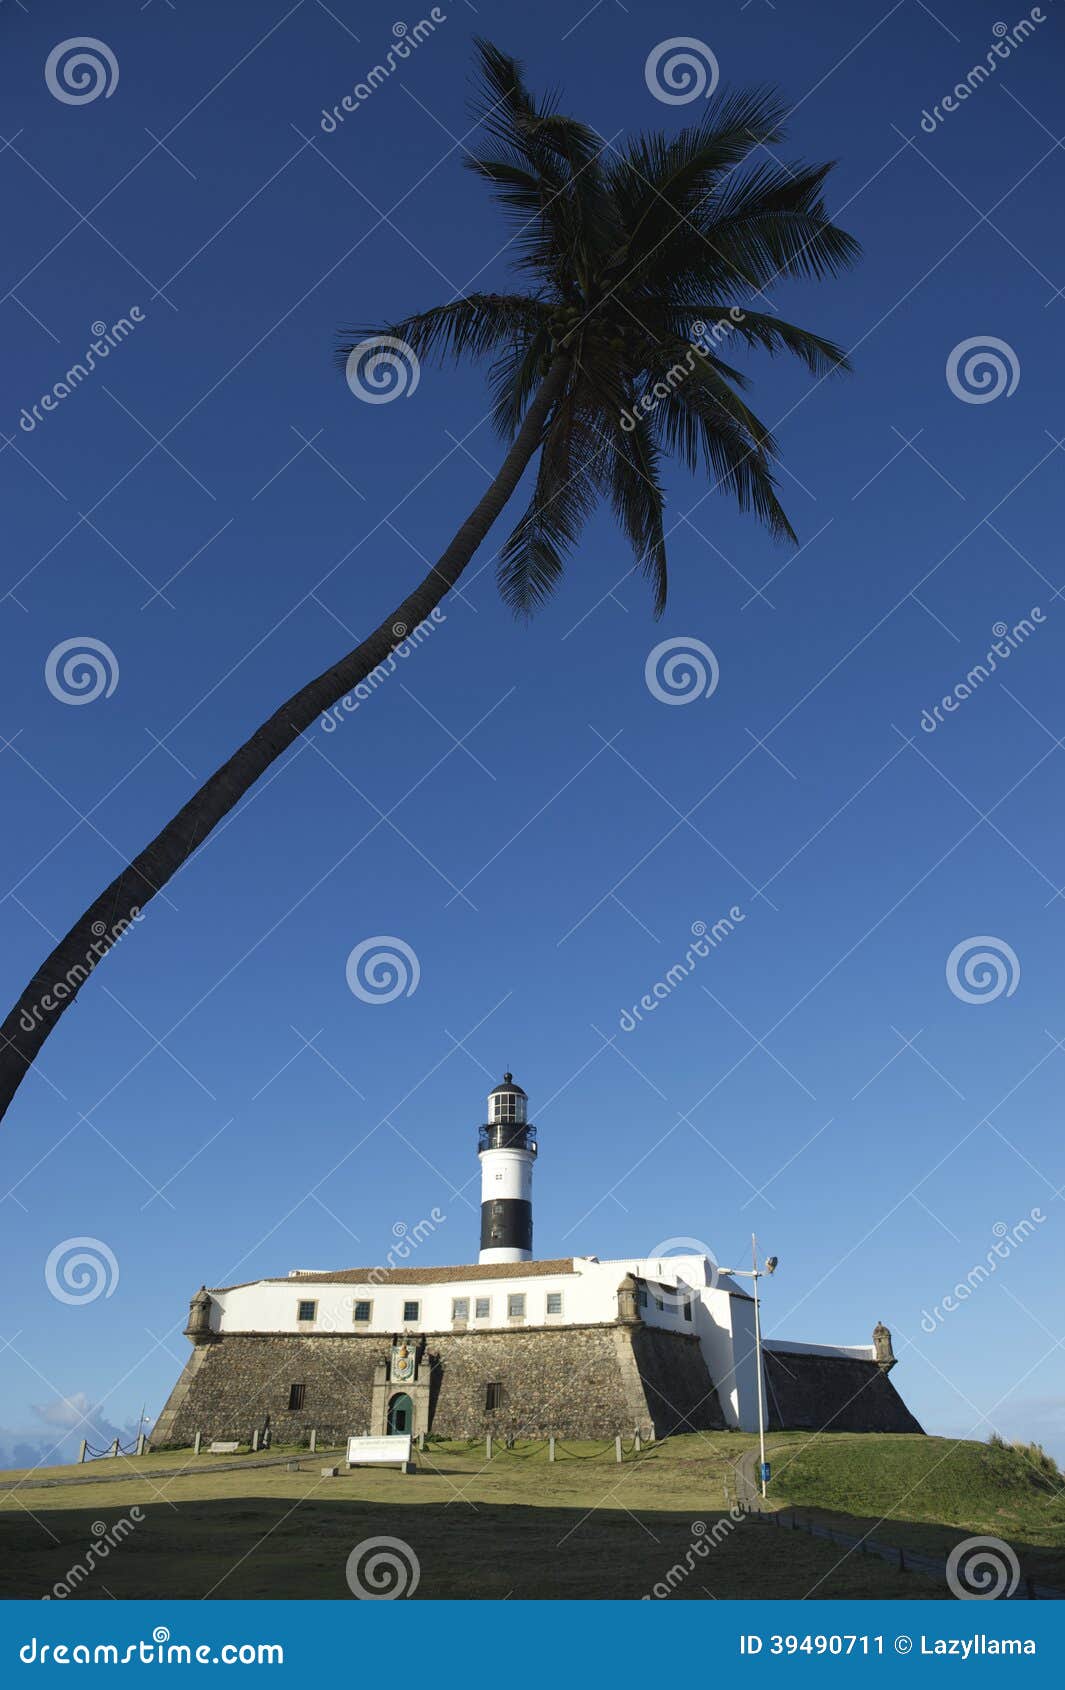 farol da barra salvador brazil lighthouse with palm tree